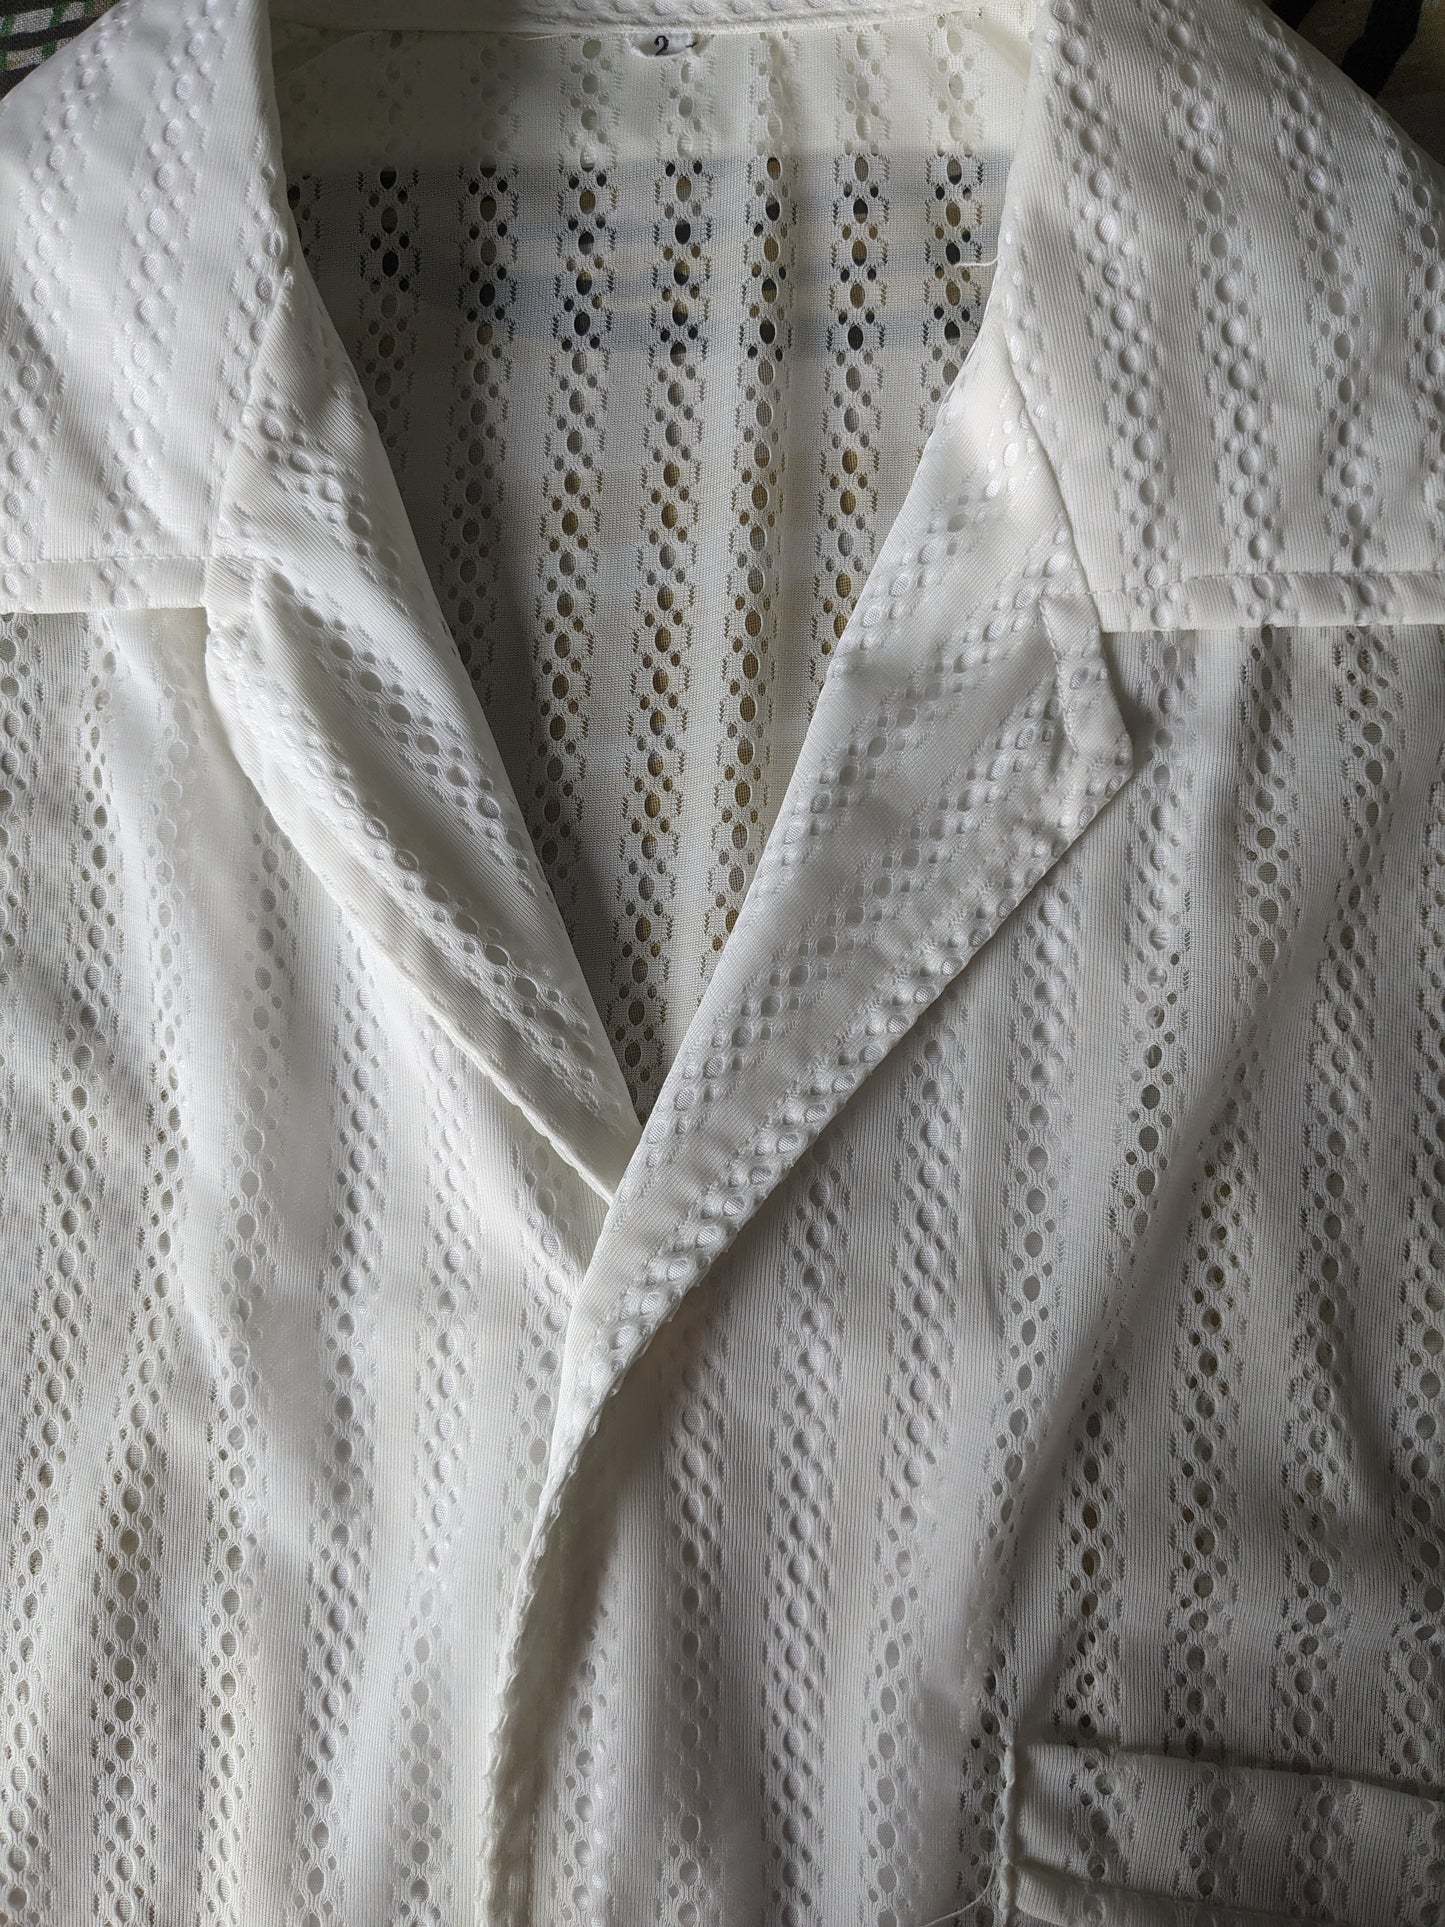 Camisa Vintage de los 70 manga corta. Motivo blanco transparente /translúcido. Talla M.